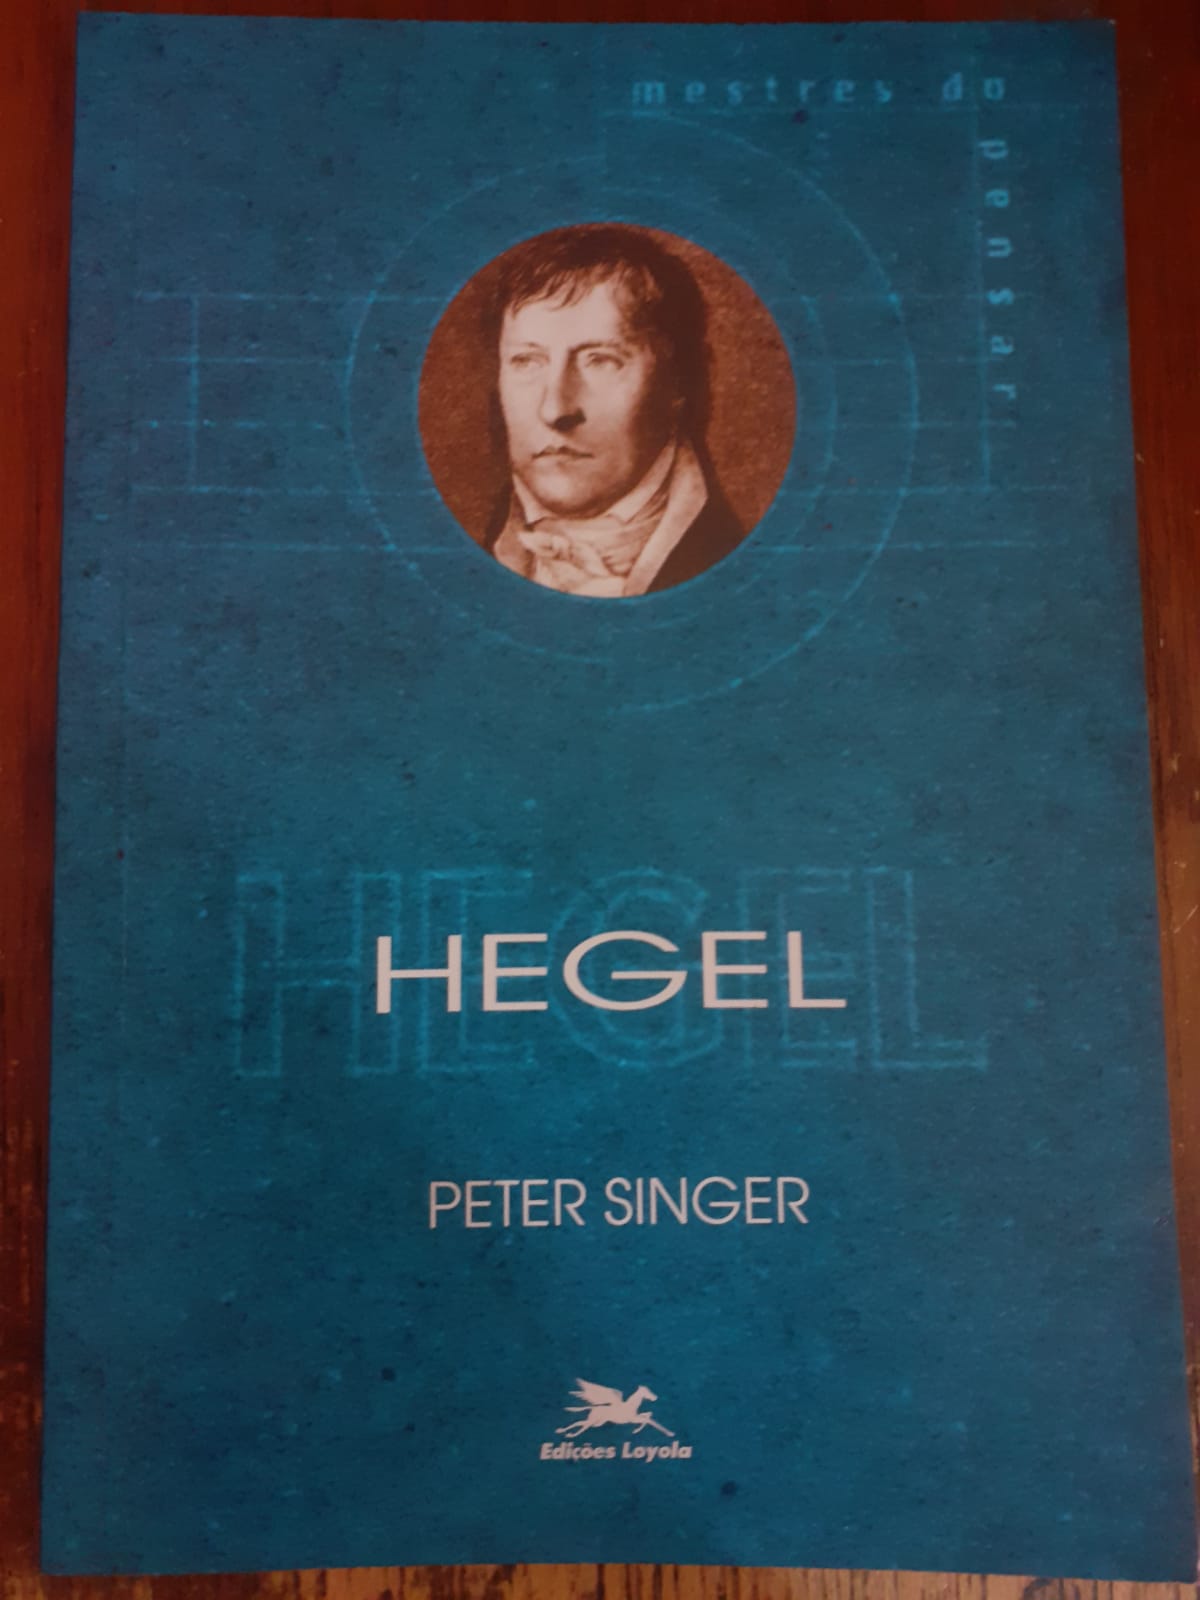 Hegel (Peter Singer)